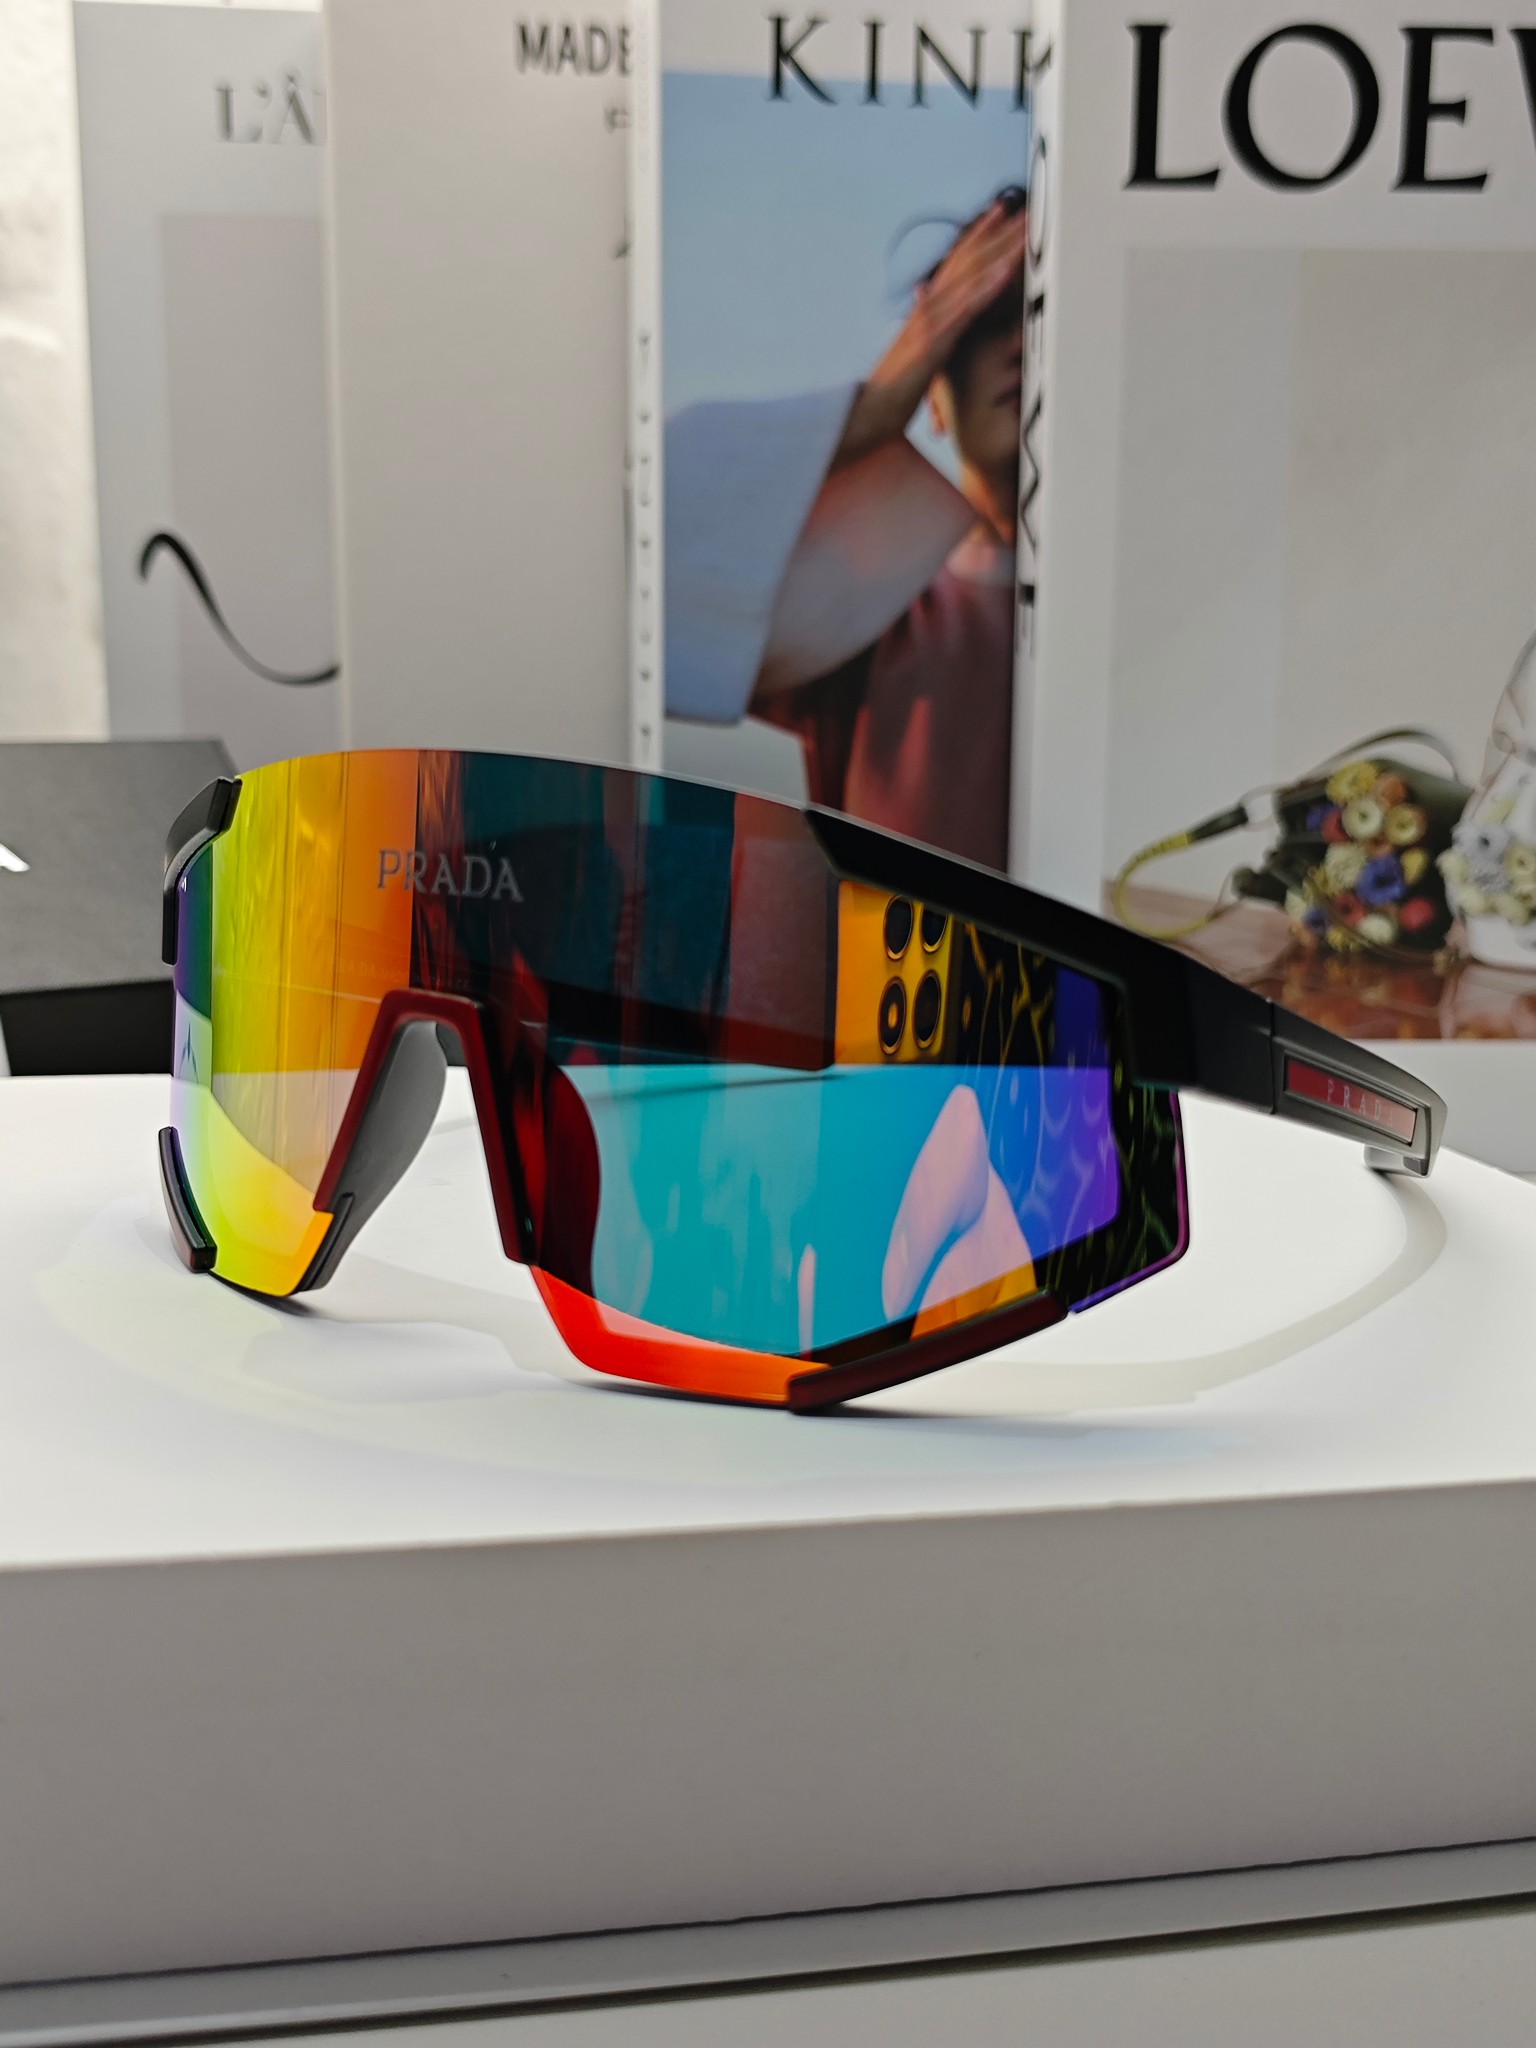 PRADA普拉达欧美高级感超轻大框连体防紫外线墨镜滑雪骑行户外护目太阳眼镜男女通用